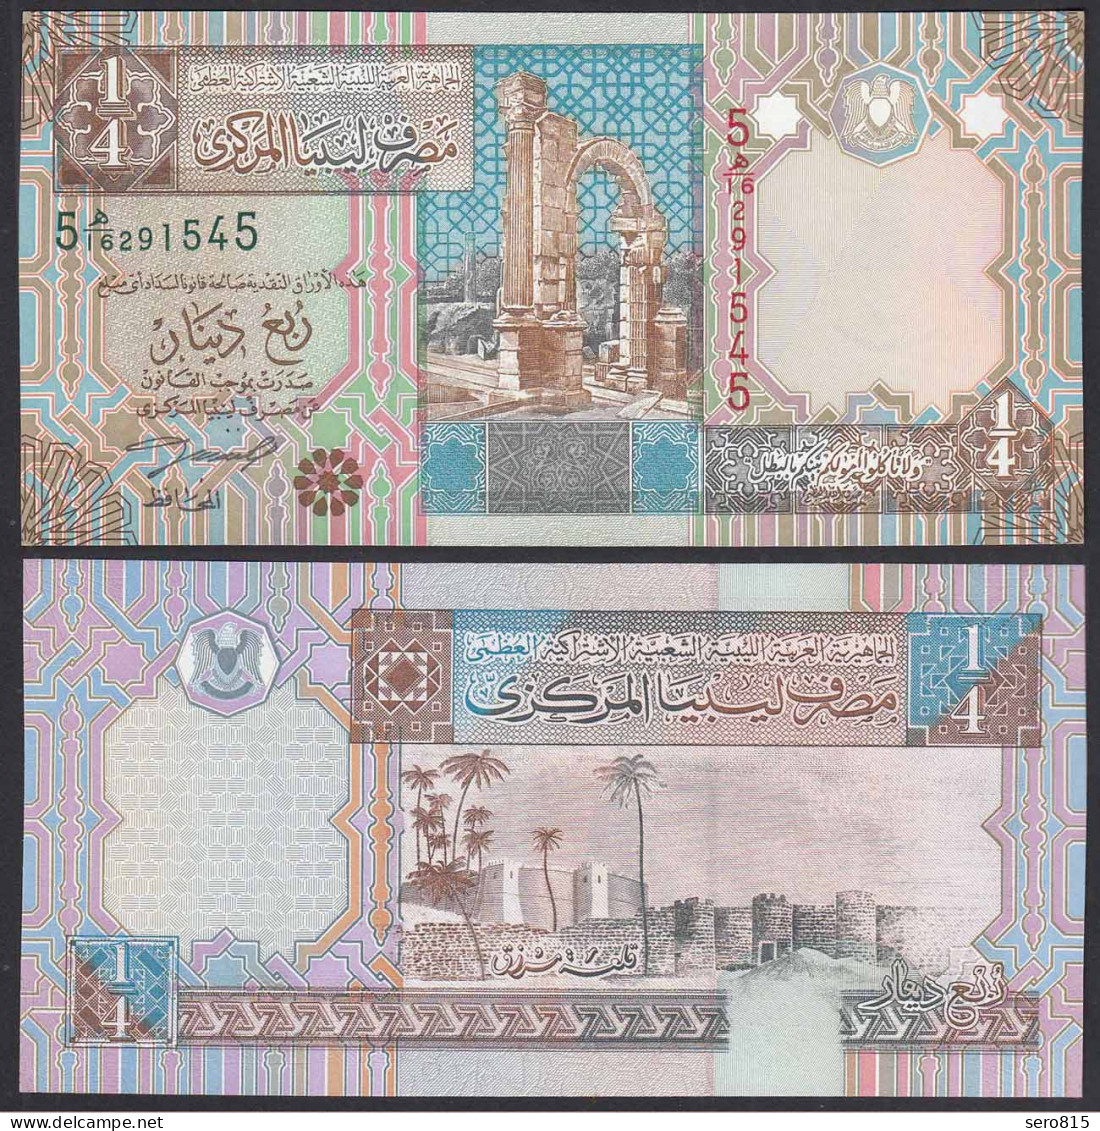 Libyen - LIBYA - 1/4 Dinar Banknote (2002) Pick 62 UNC (1)     (31870 - Altri – Africa